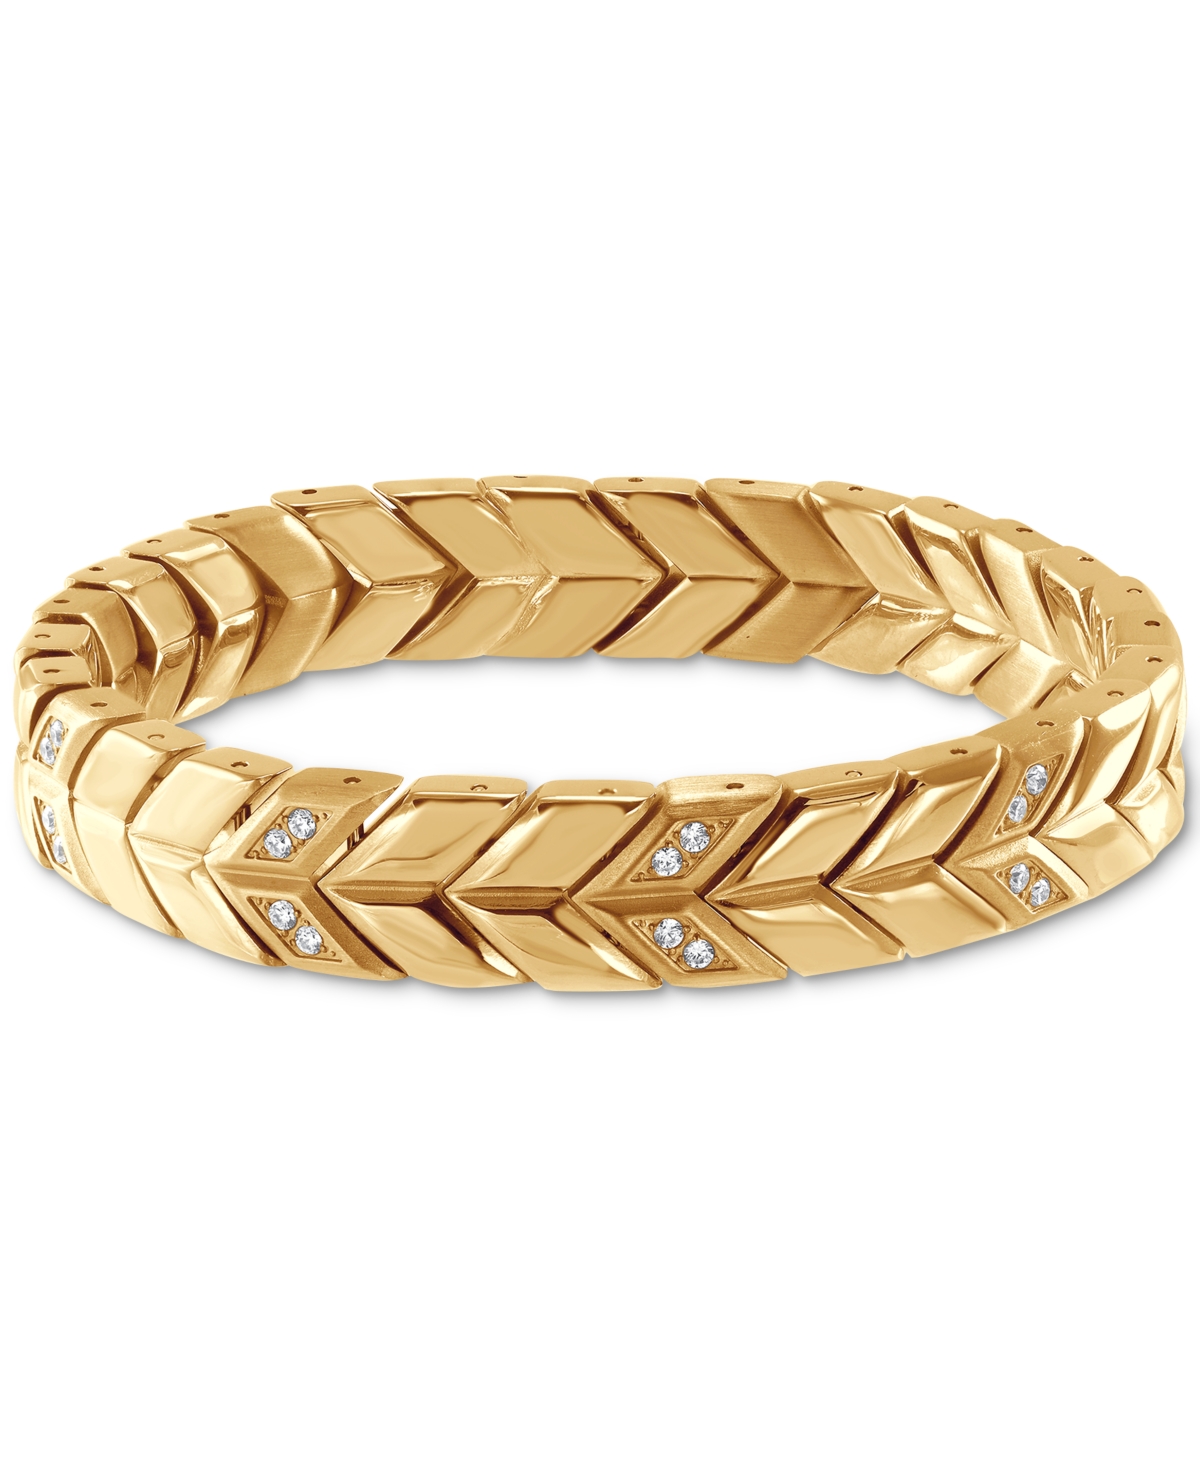 Men's Cubic Zirconia Chevron Link Bracelet in Stainless Steel - Gold-Tone